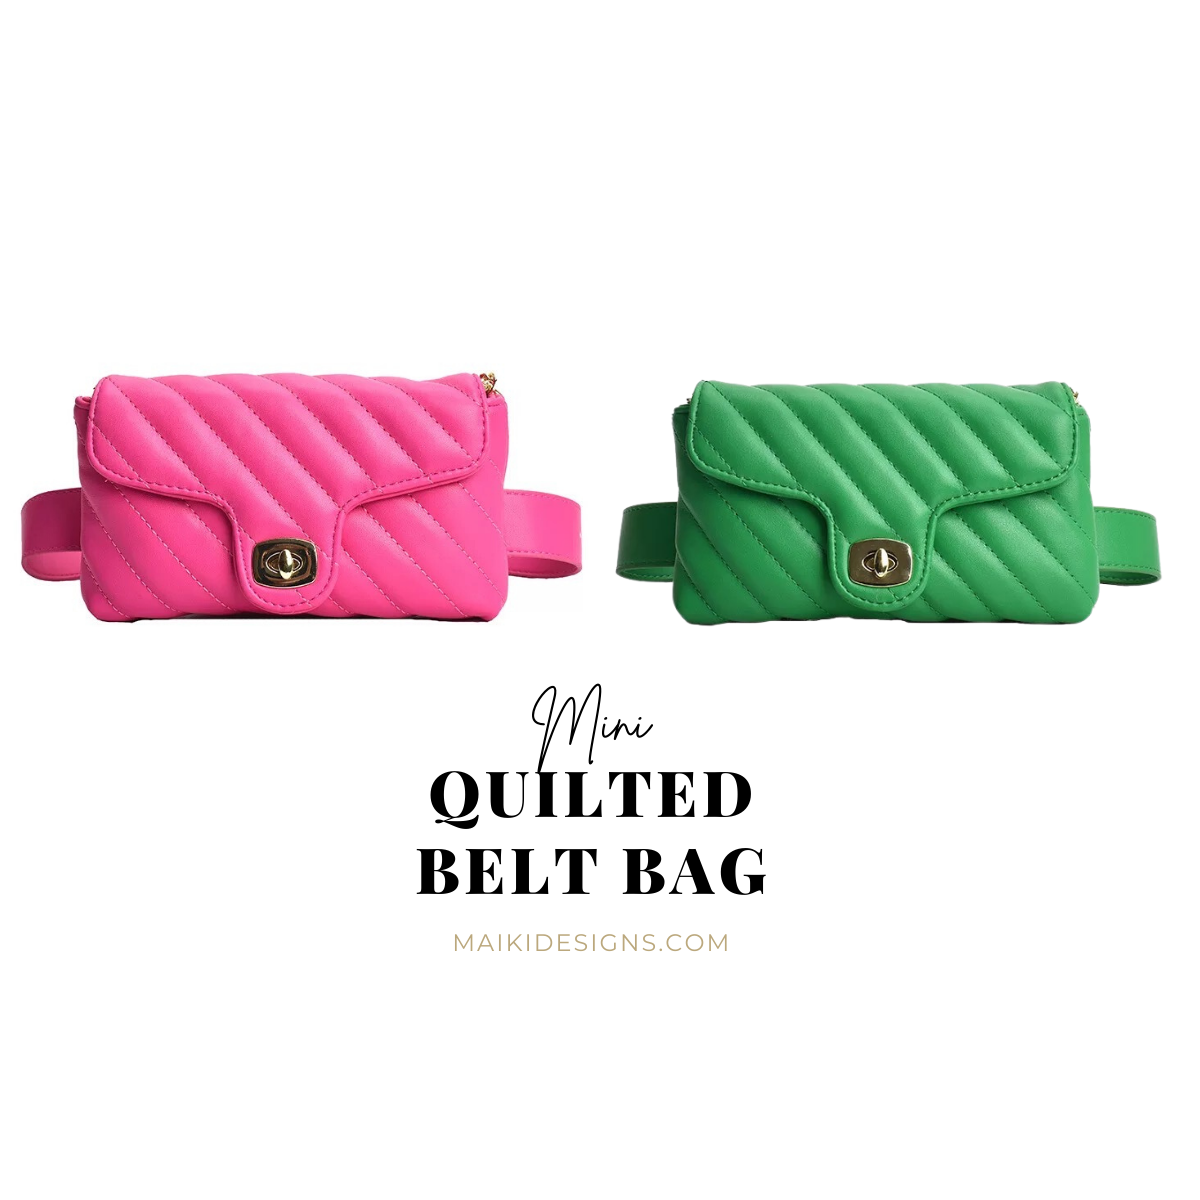 Mini Quilted Belt Bag